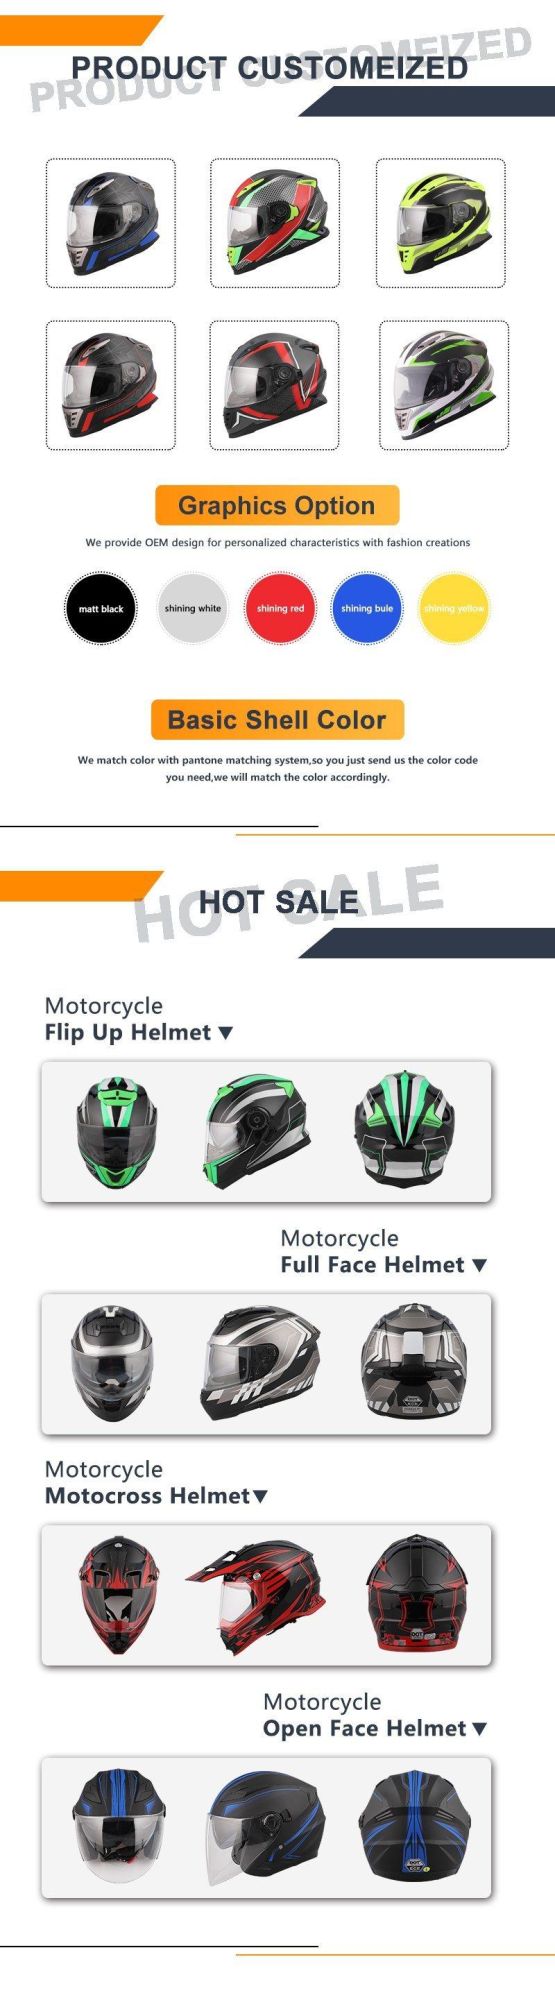 Colorful ABS Motorcycle Full Face Helmet Double Visors Road Motorbike Helmets